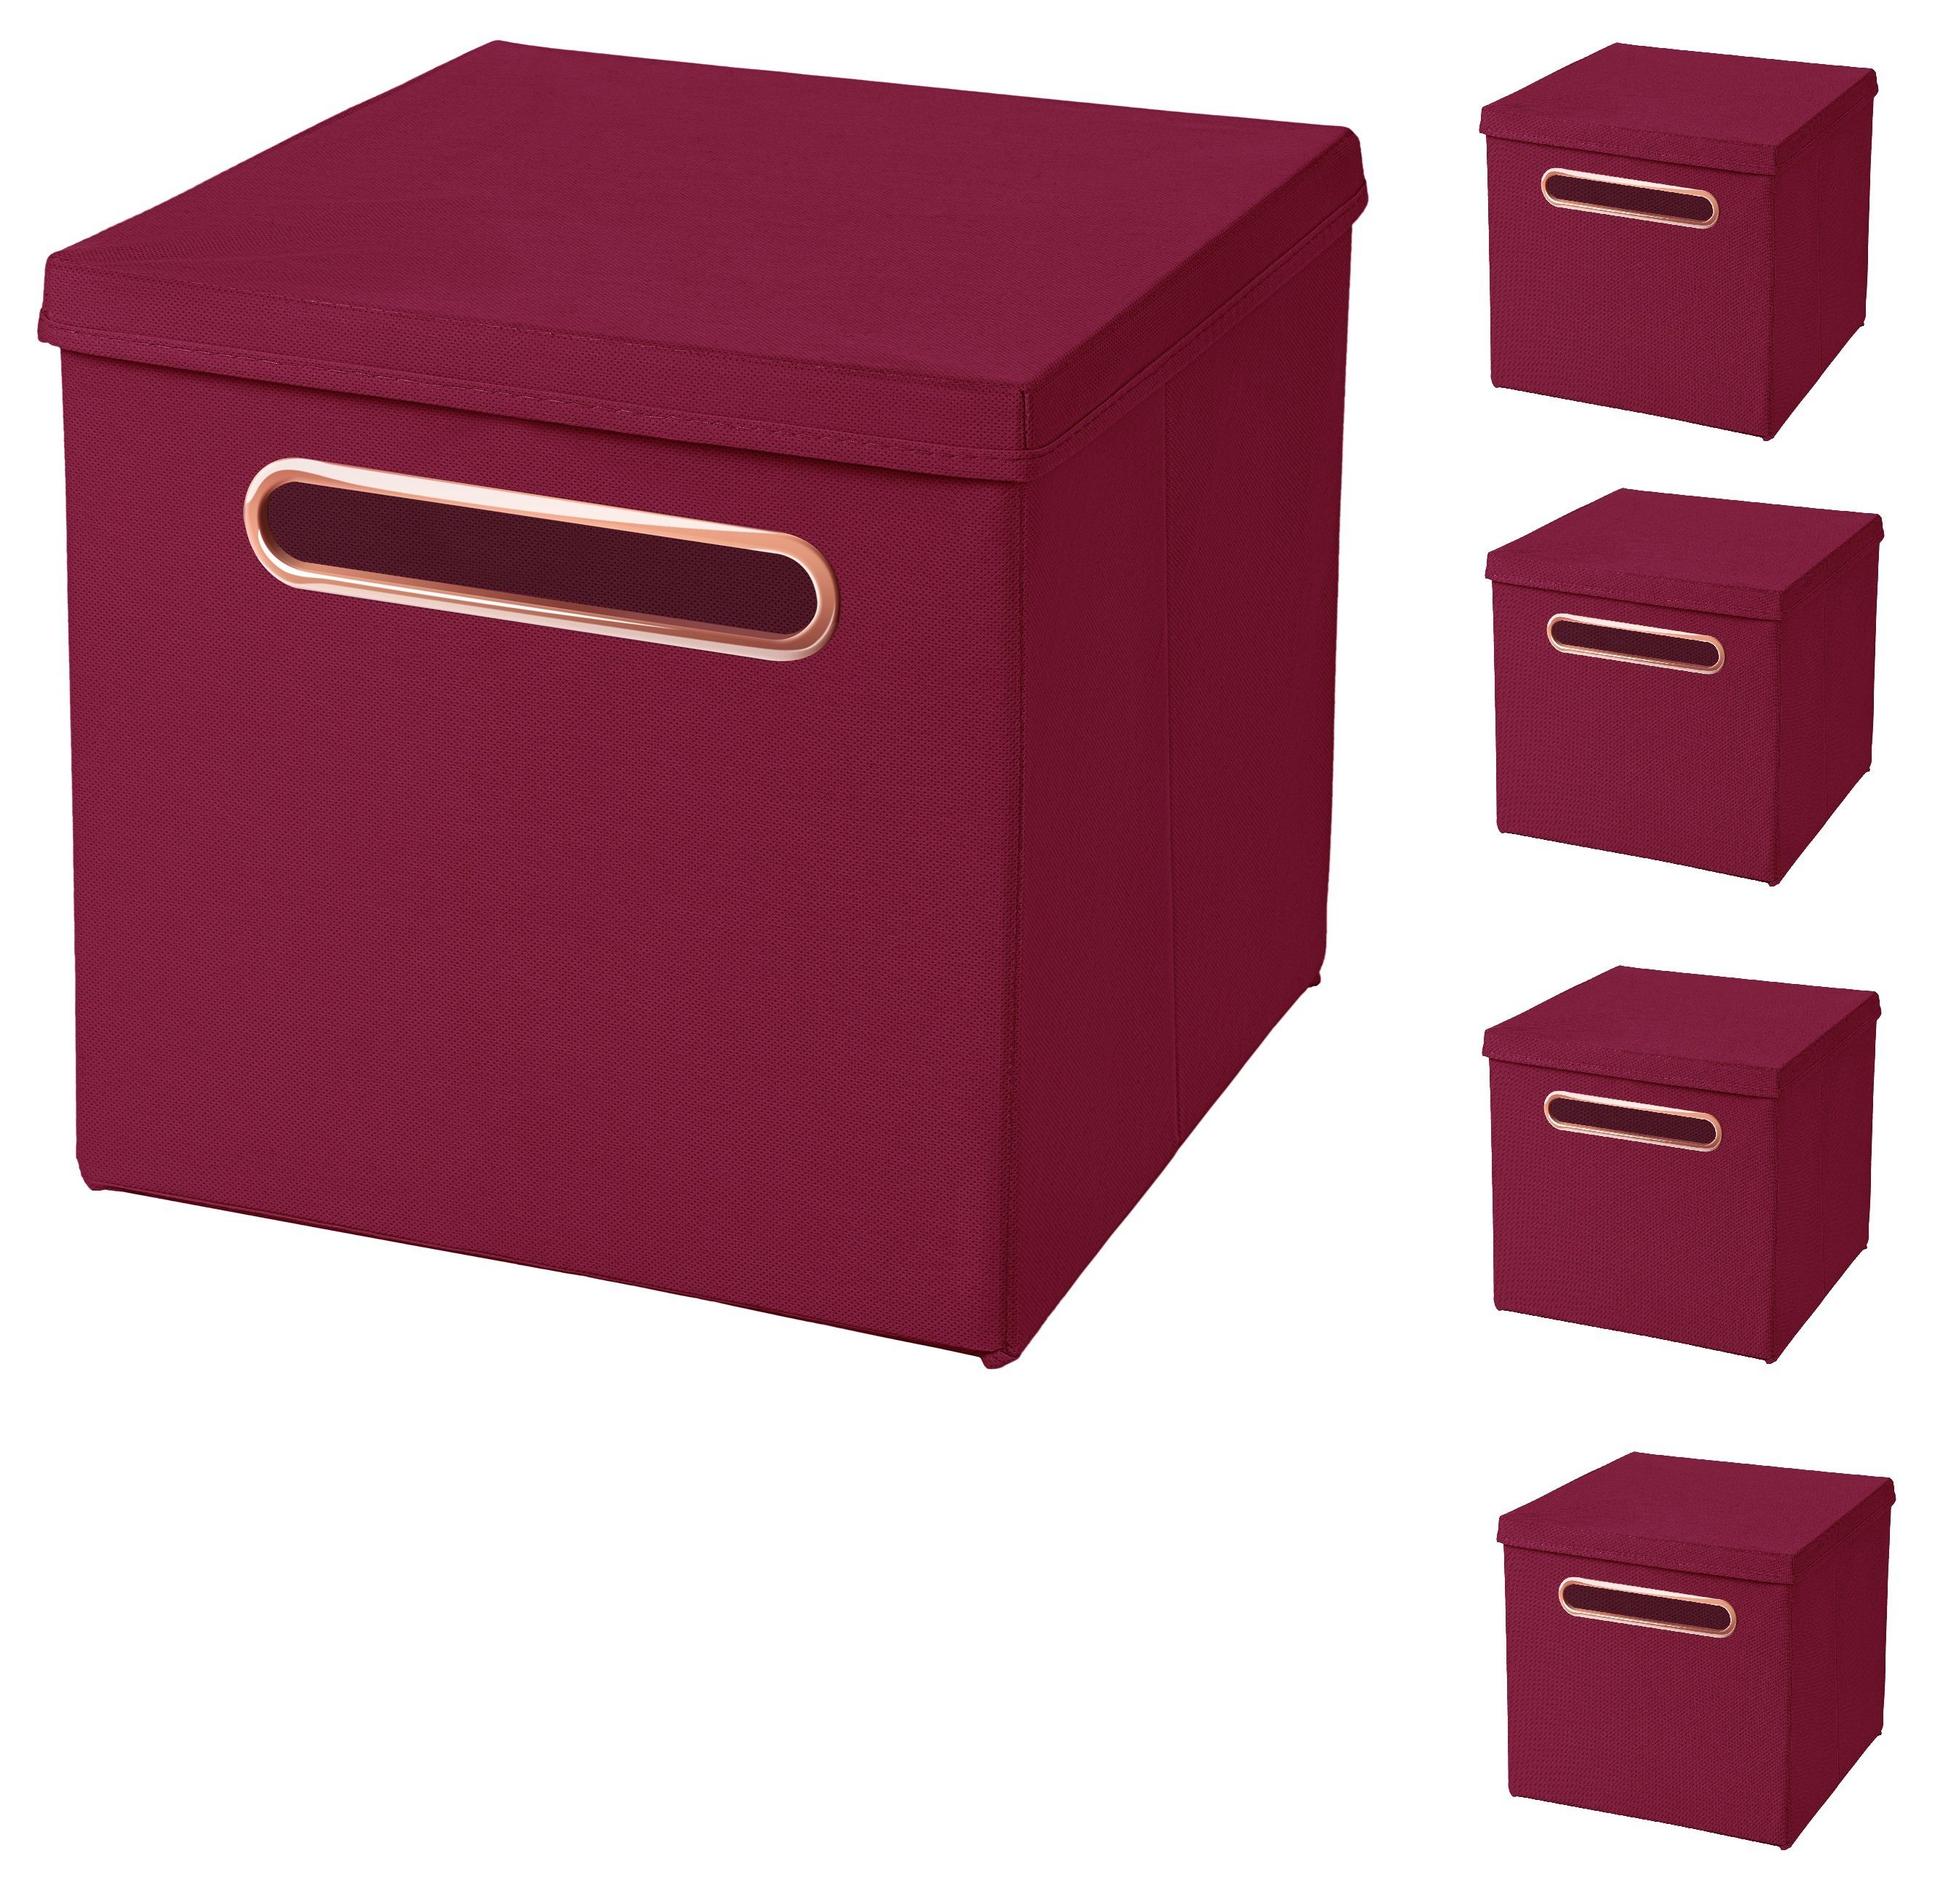 2x Luxus Rosegold Griff Faltbox in Rosa 32,5 x 32,5 x 32,5 cm Aufbewahrungsbox 